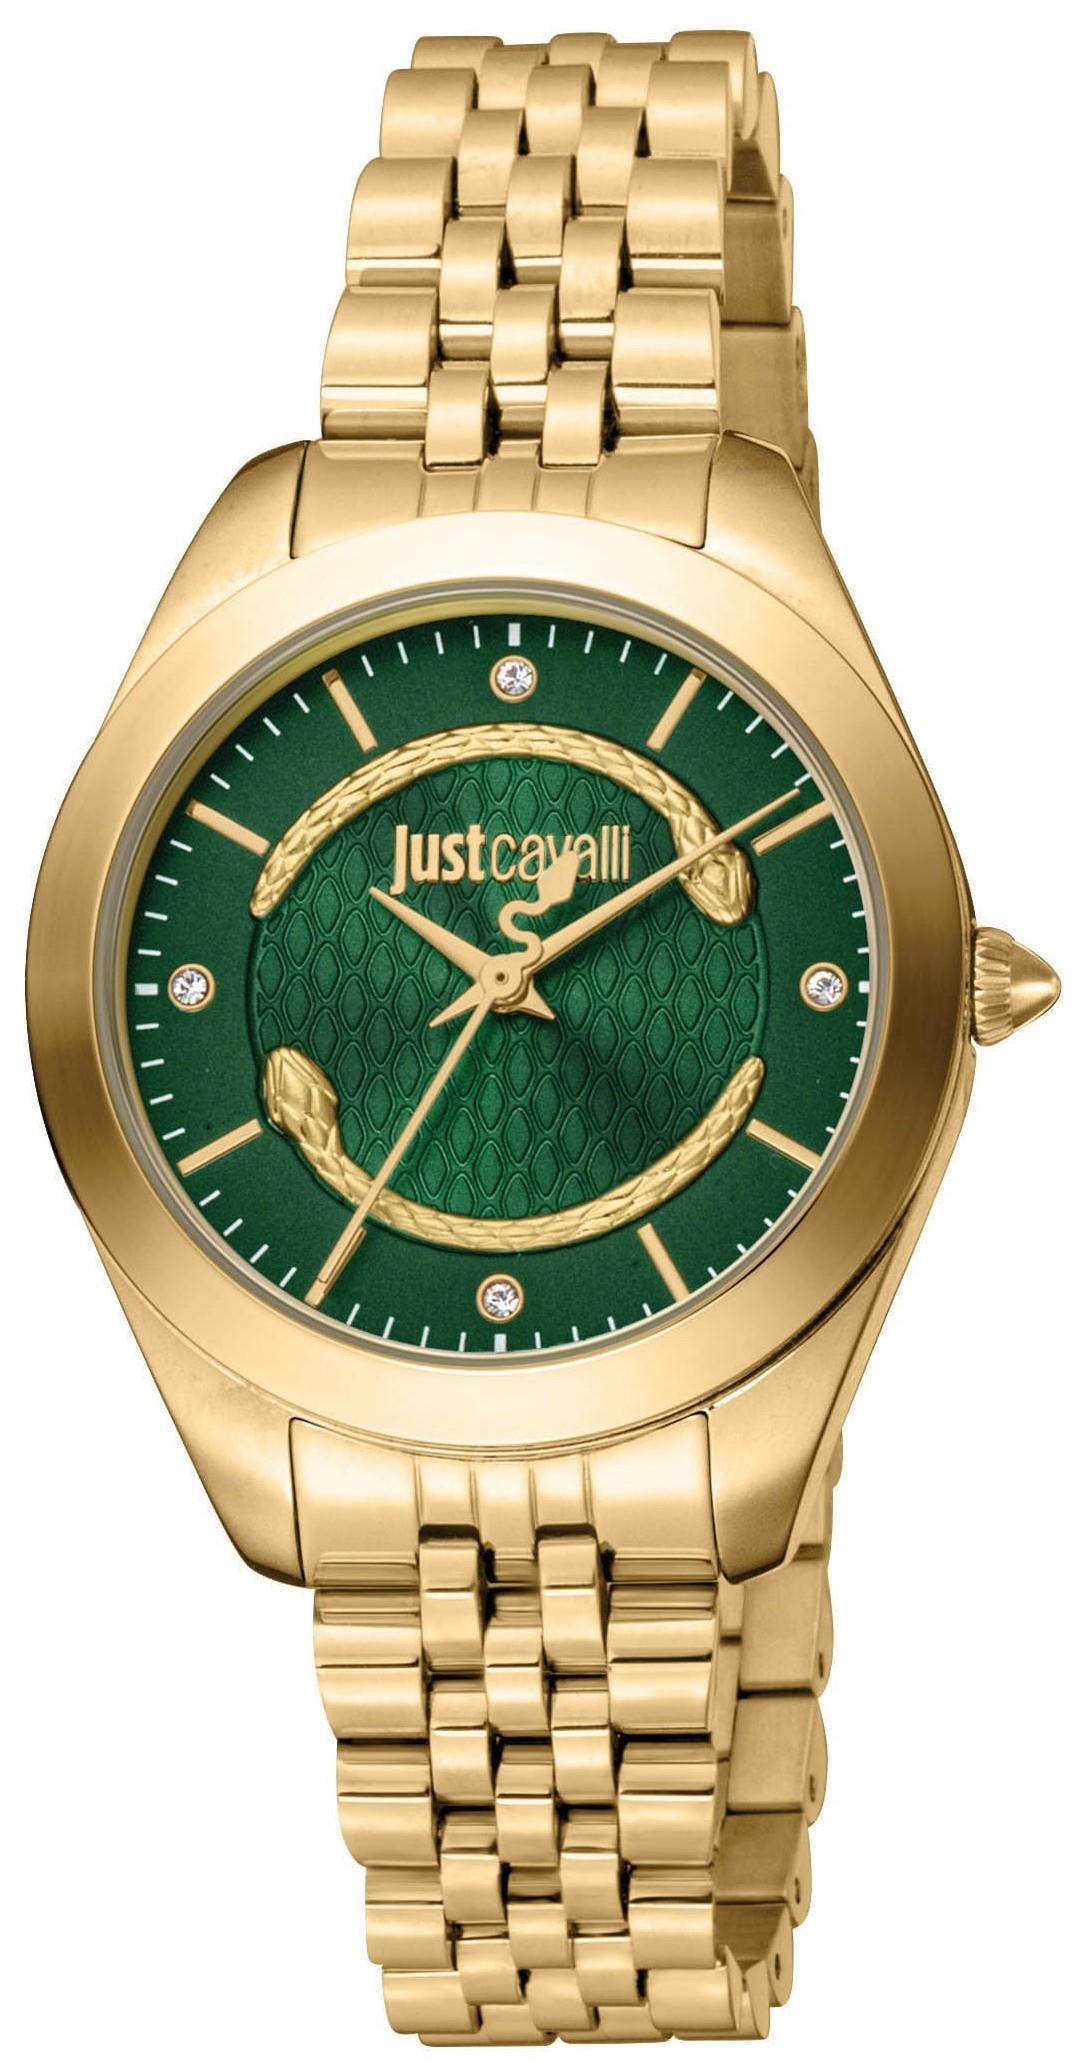 JUST CAVALLI Cerchio - JC1L210M0475, Gold case with Stainless Steel Bracelet